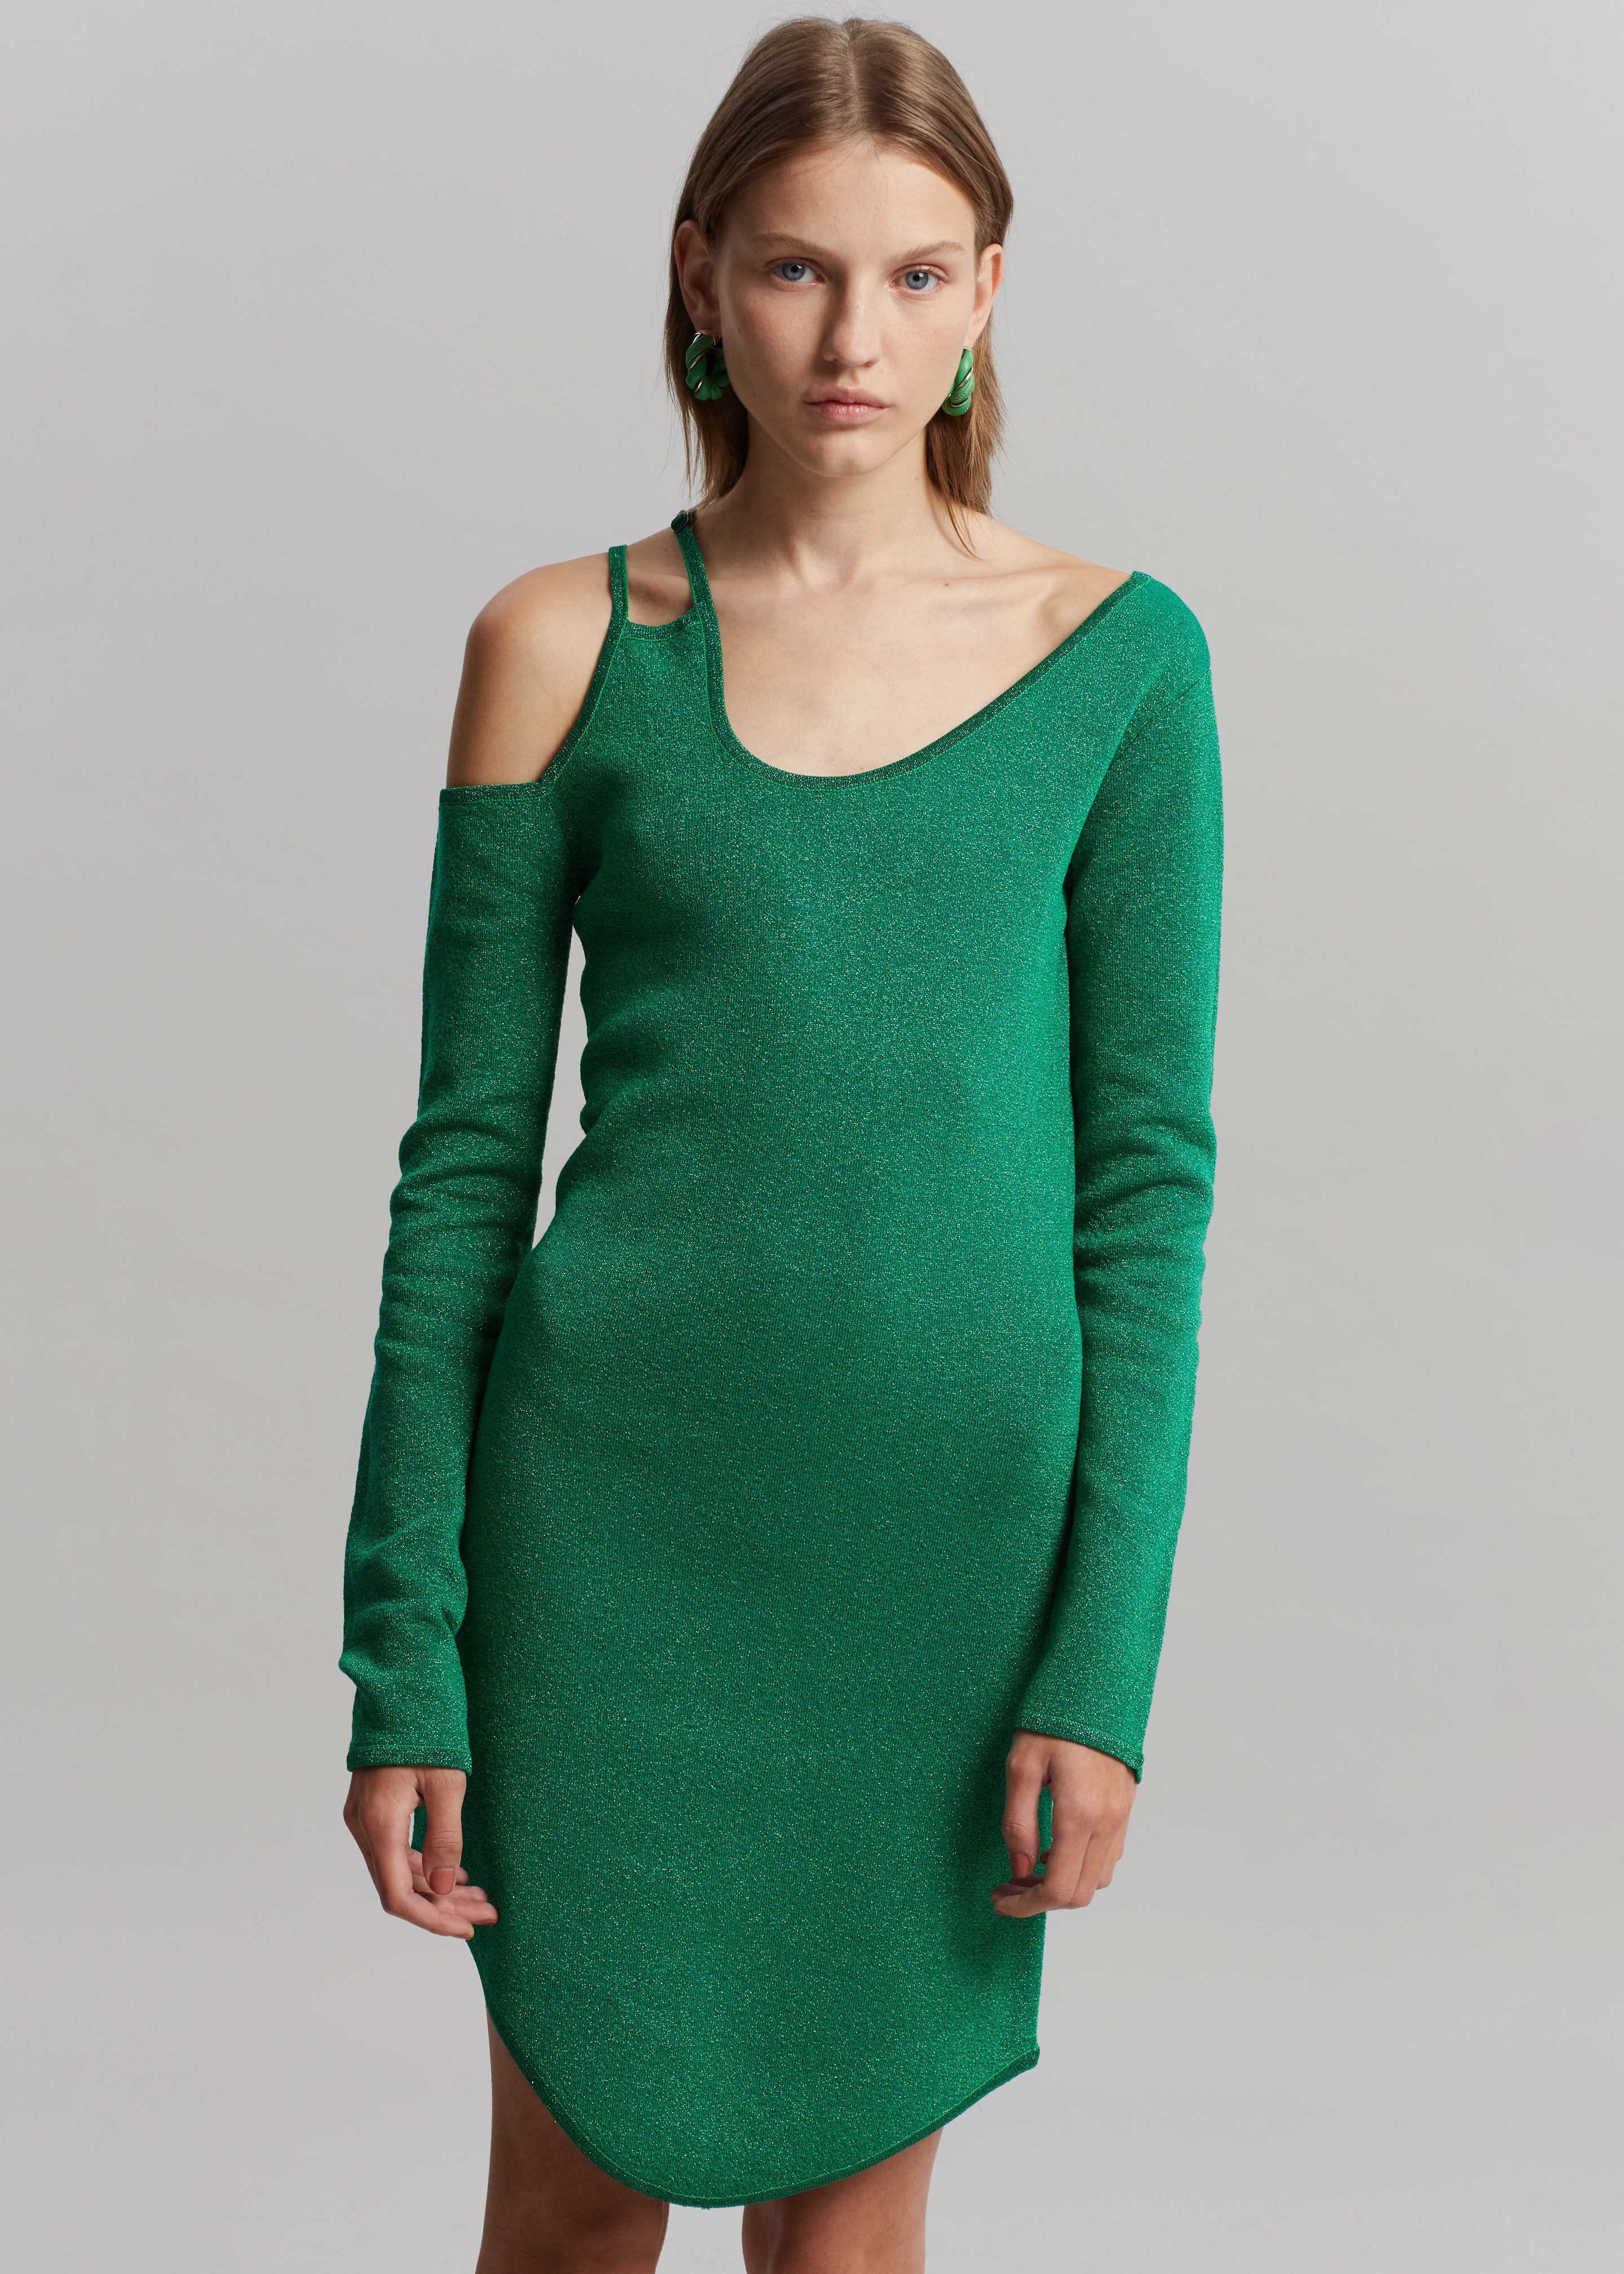 JW Anderson Cut Out Detail Asymmetric Dress - Emerald - 4